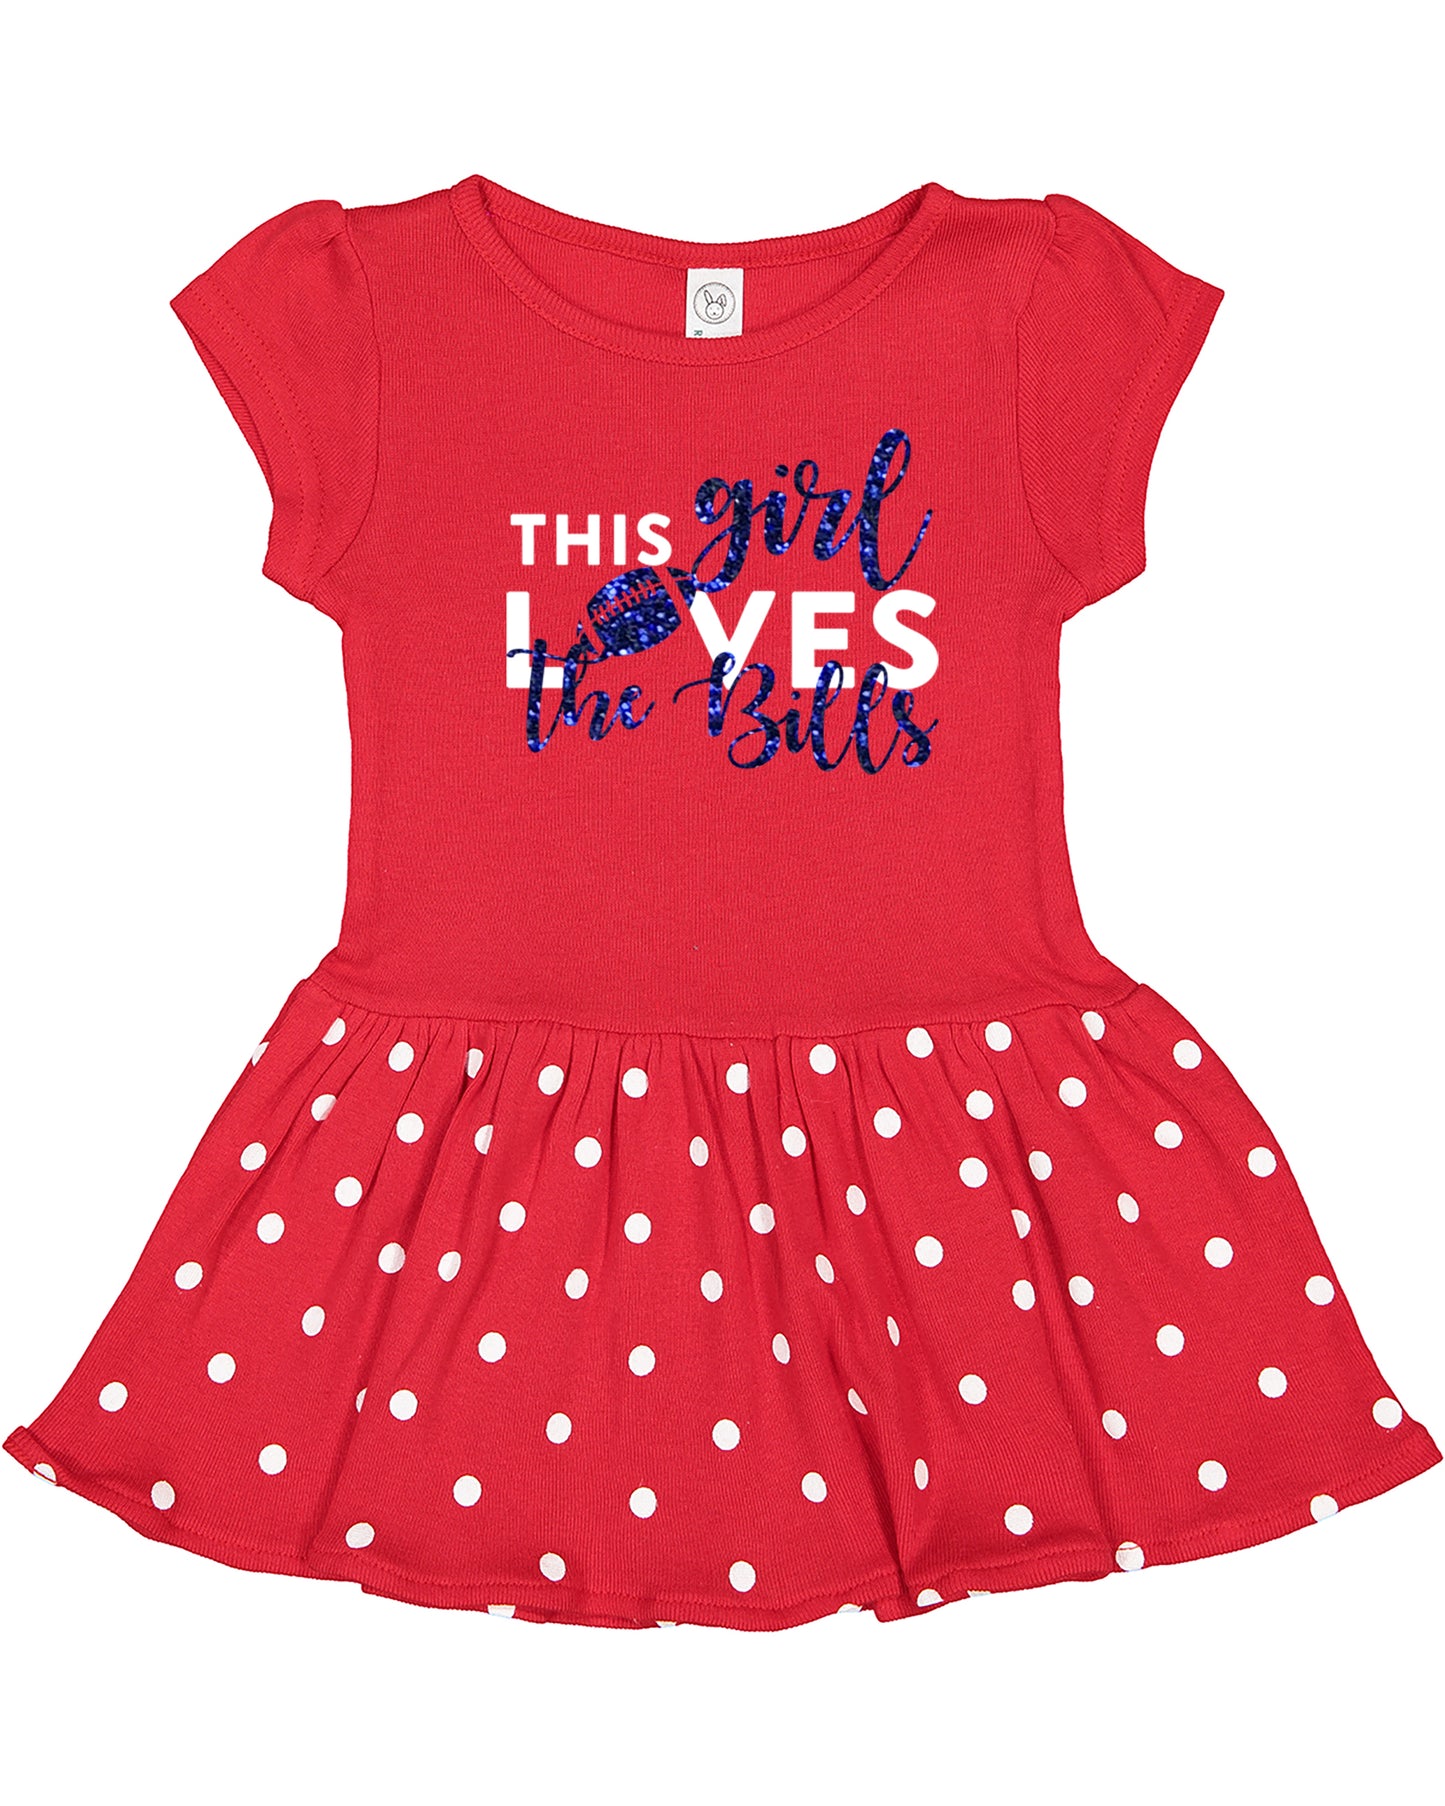 This Girl Loves the Bills Dress | Bills Baby Toddler Dress